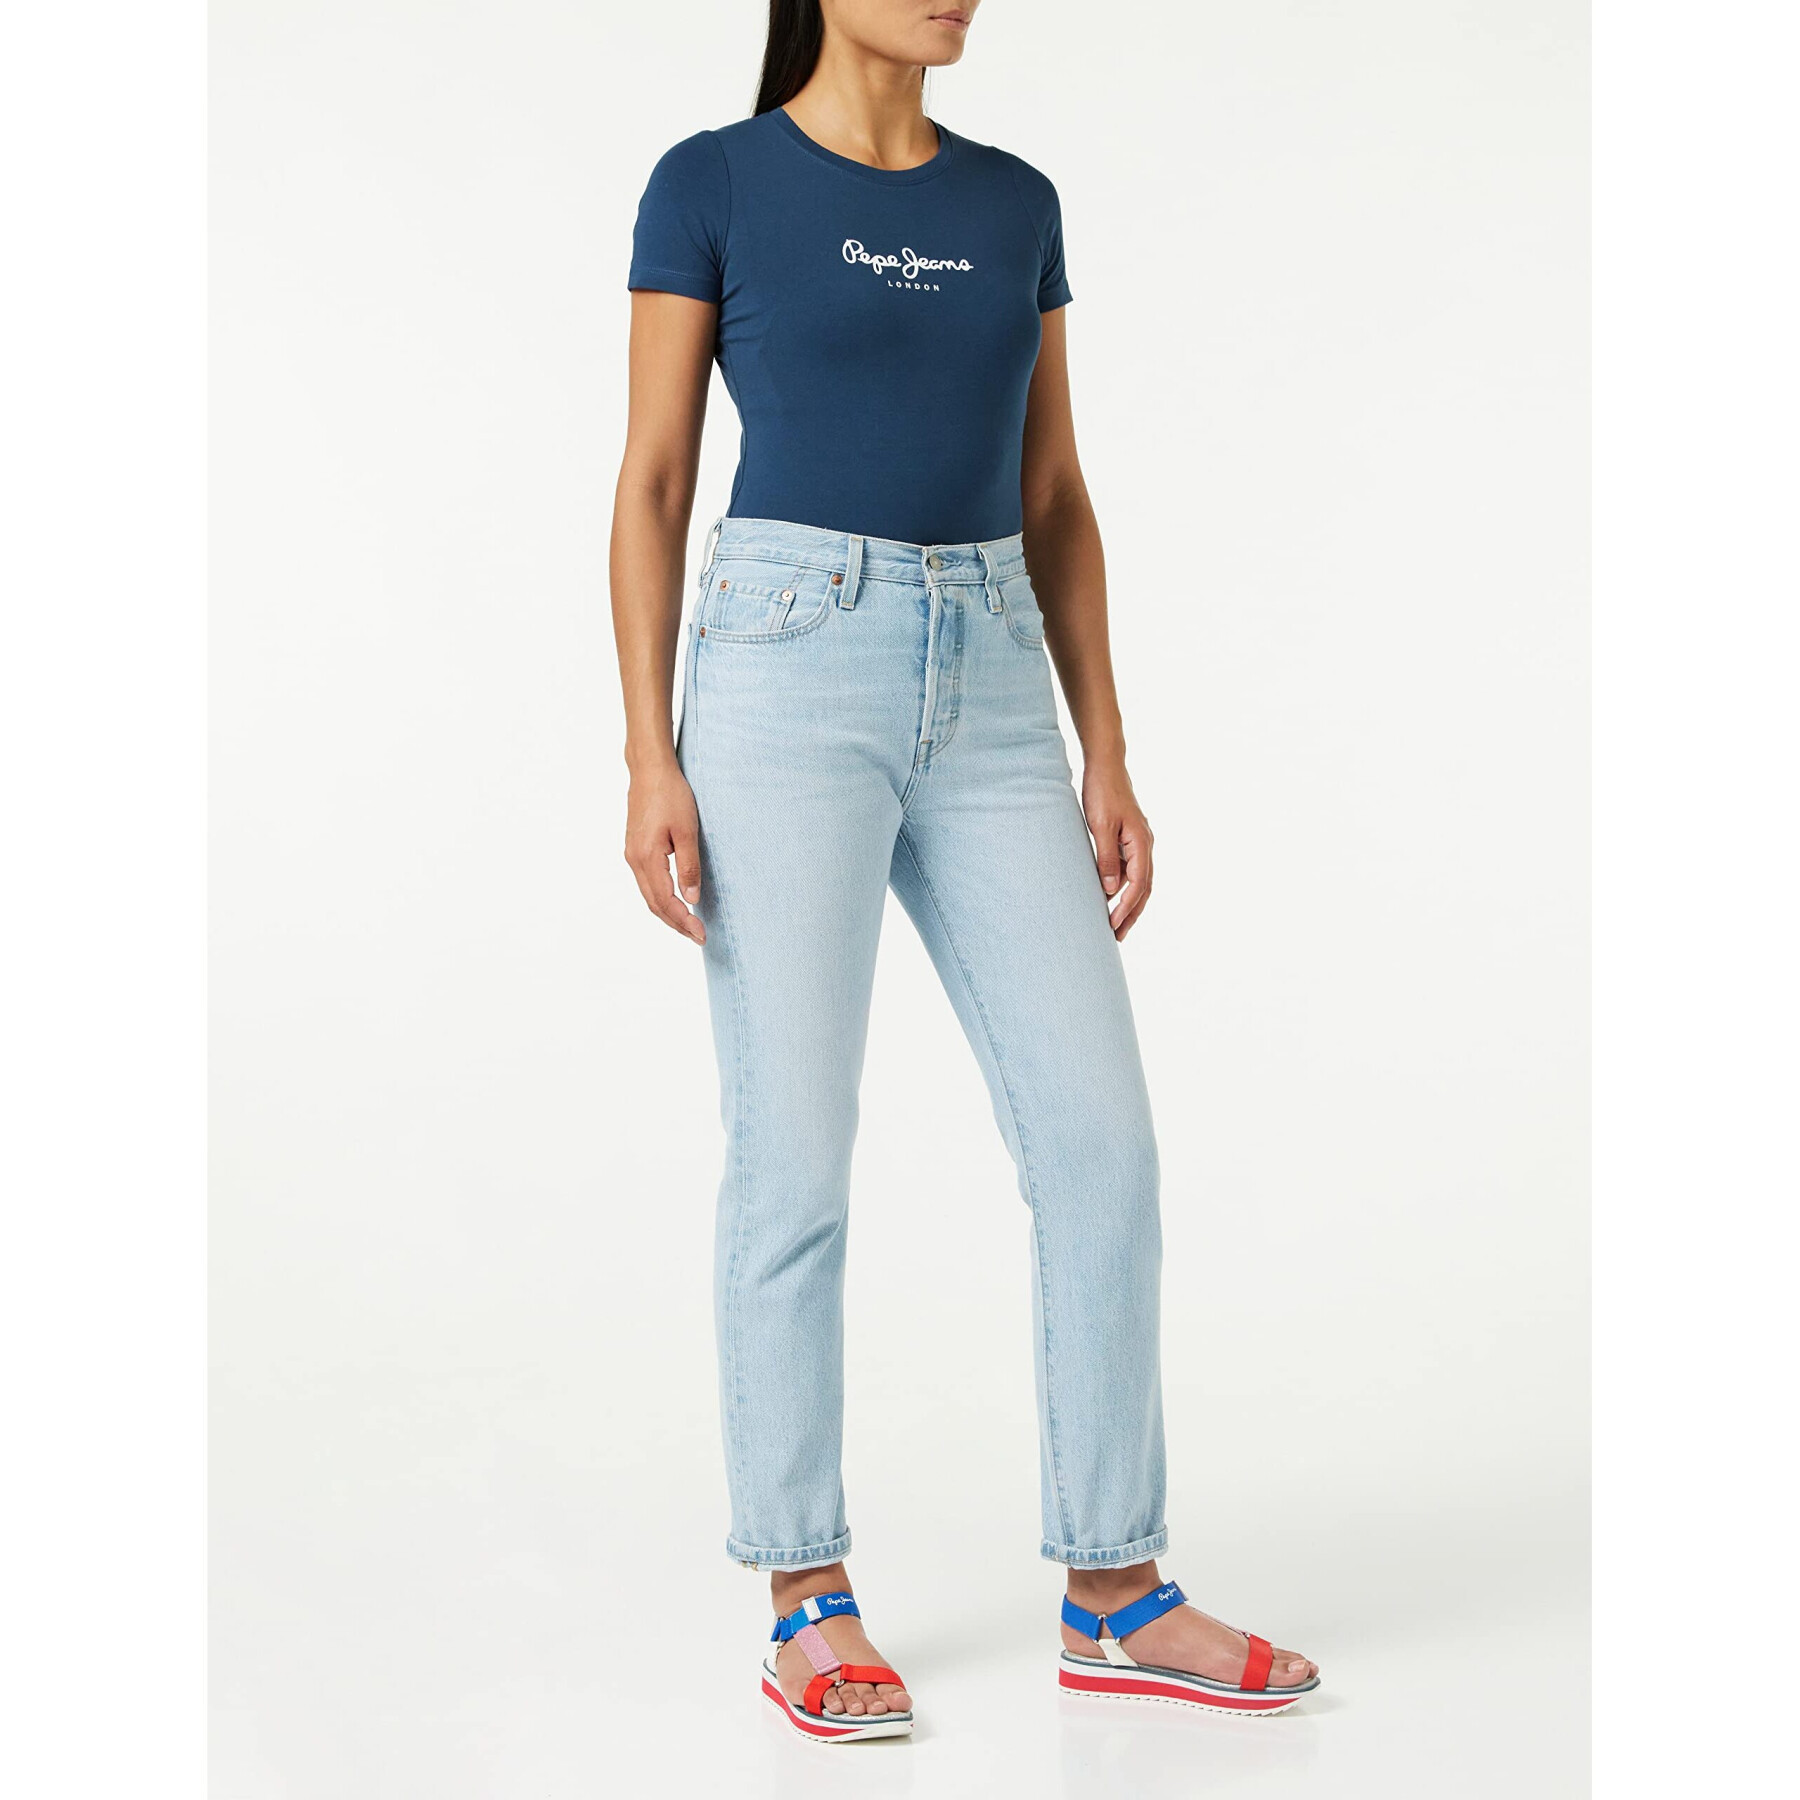 Women's T-shirt Pepe Jeans New Virginia